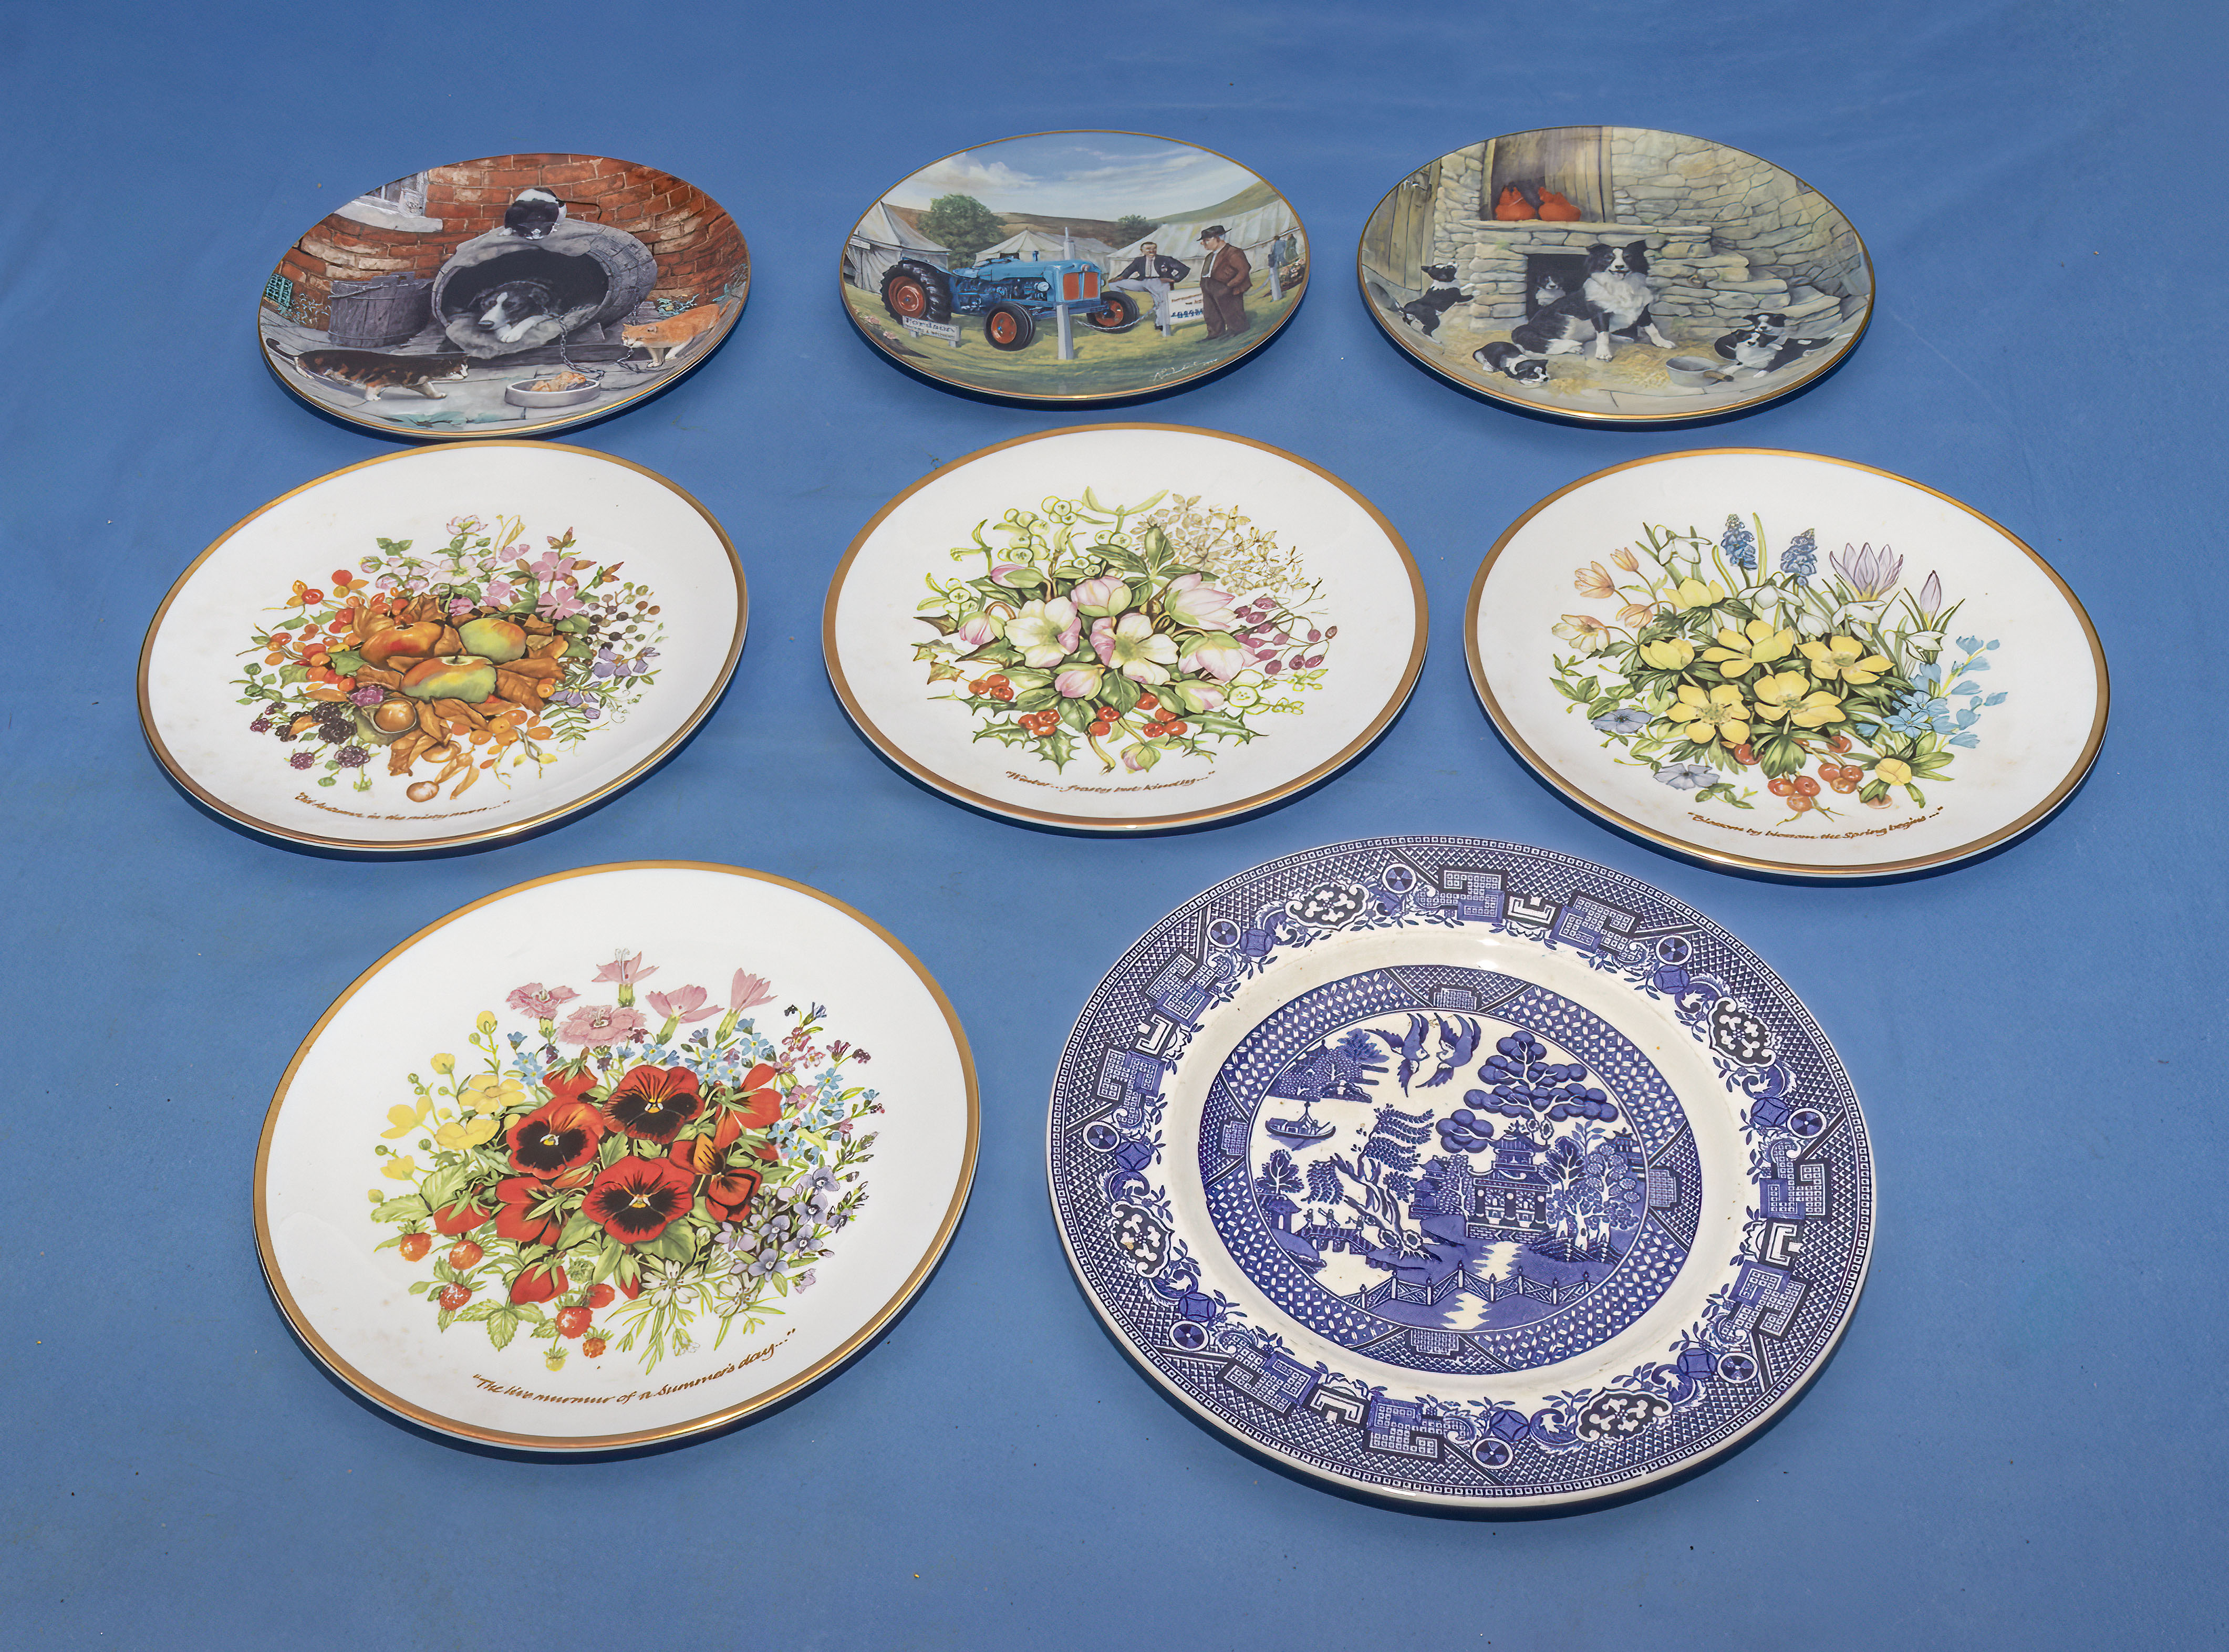 Eight decorative plates